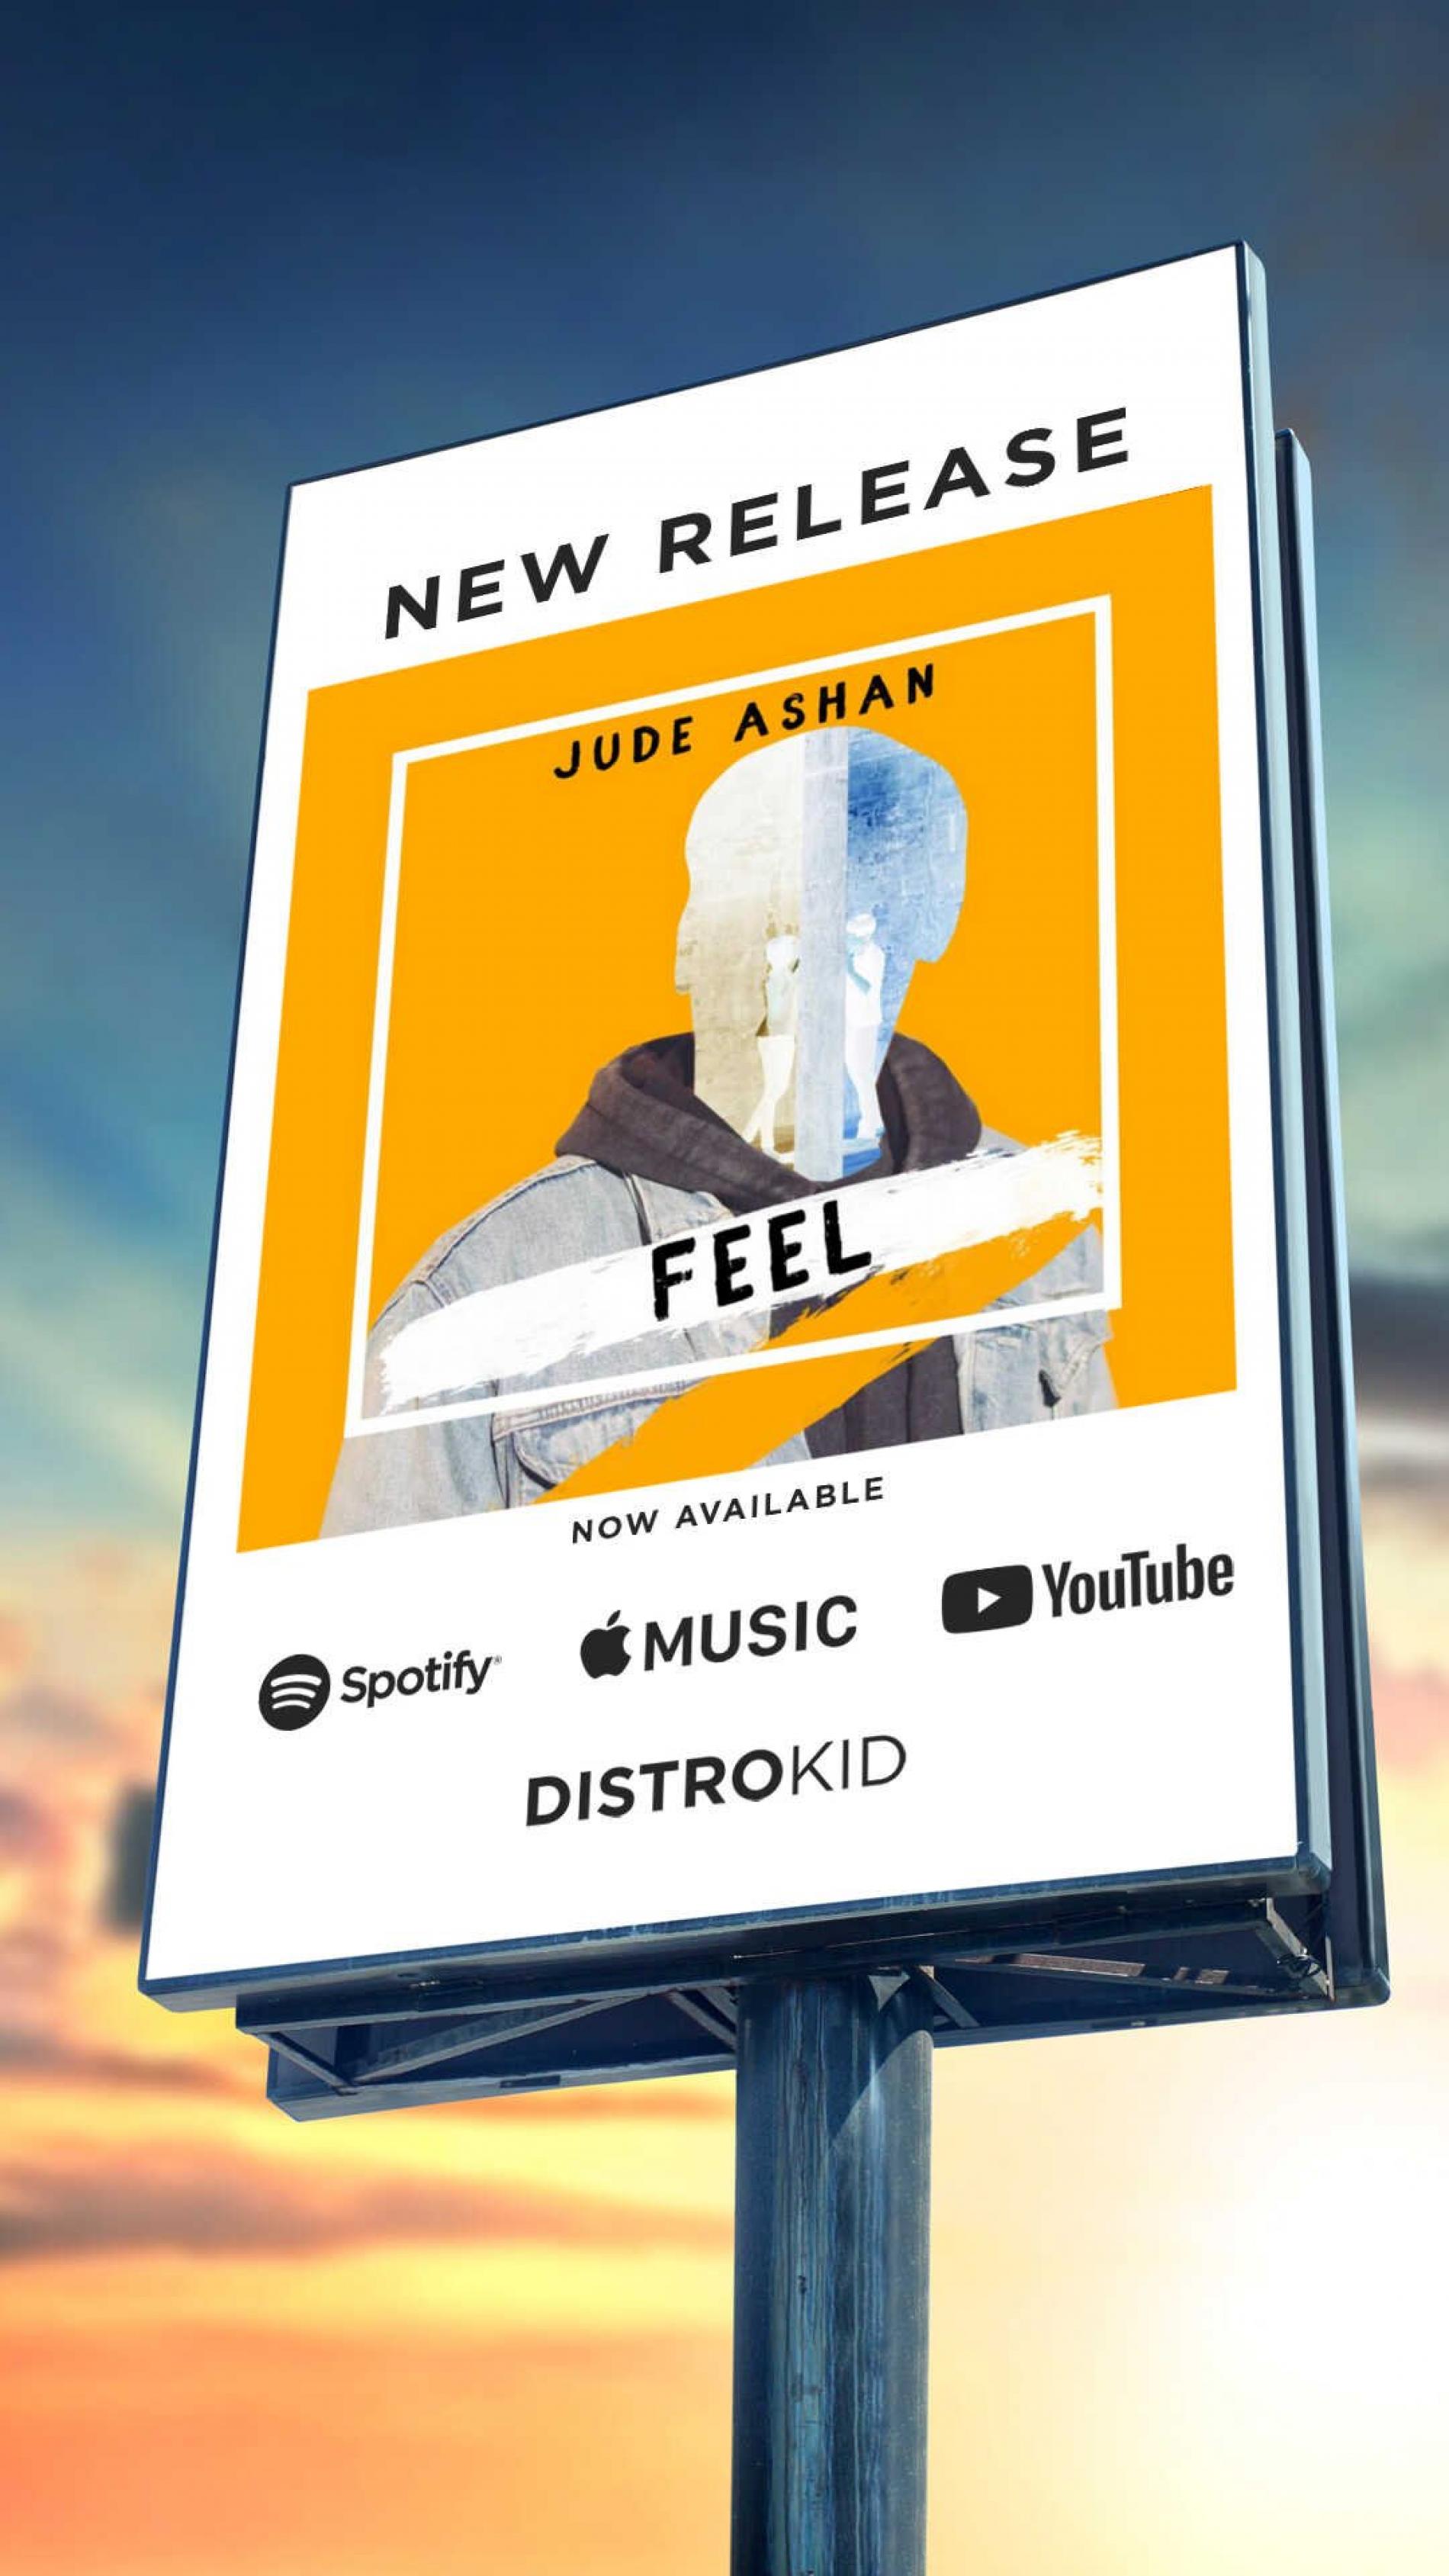 New Music : Feel (Robbie Williams) – Jude Ashan | Rock Cover